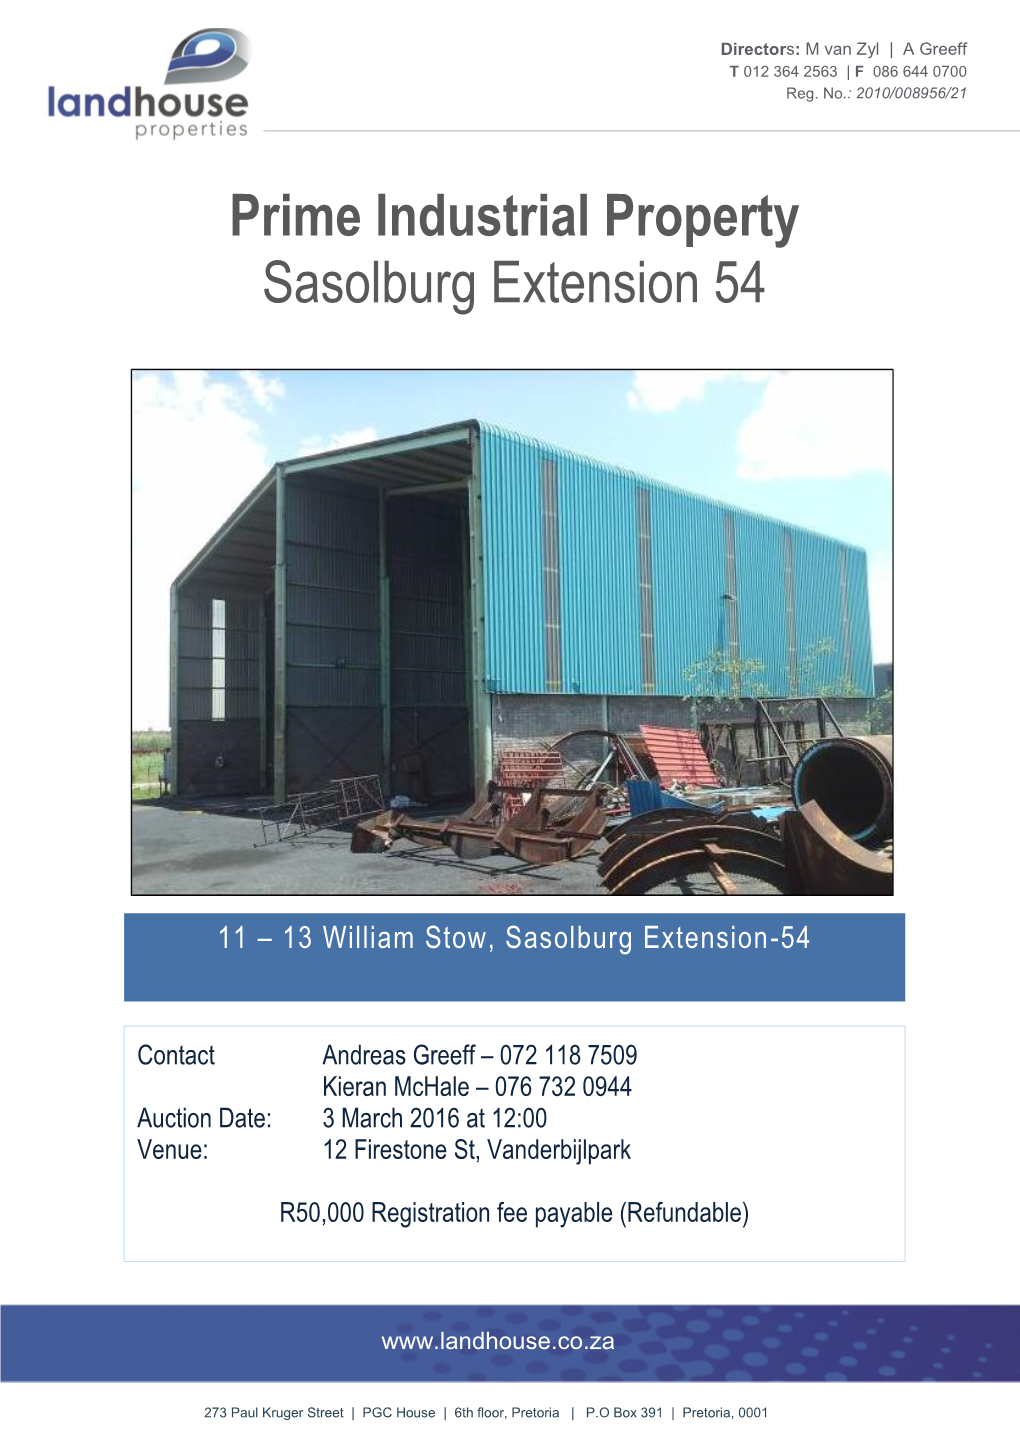 Prime Industrial Property Sasolburg Extension 54